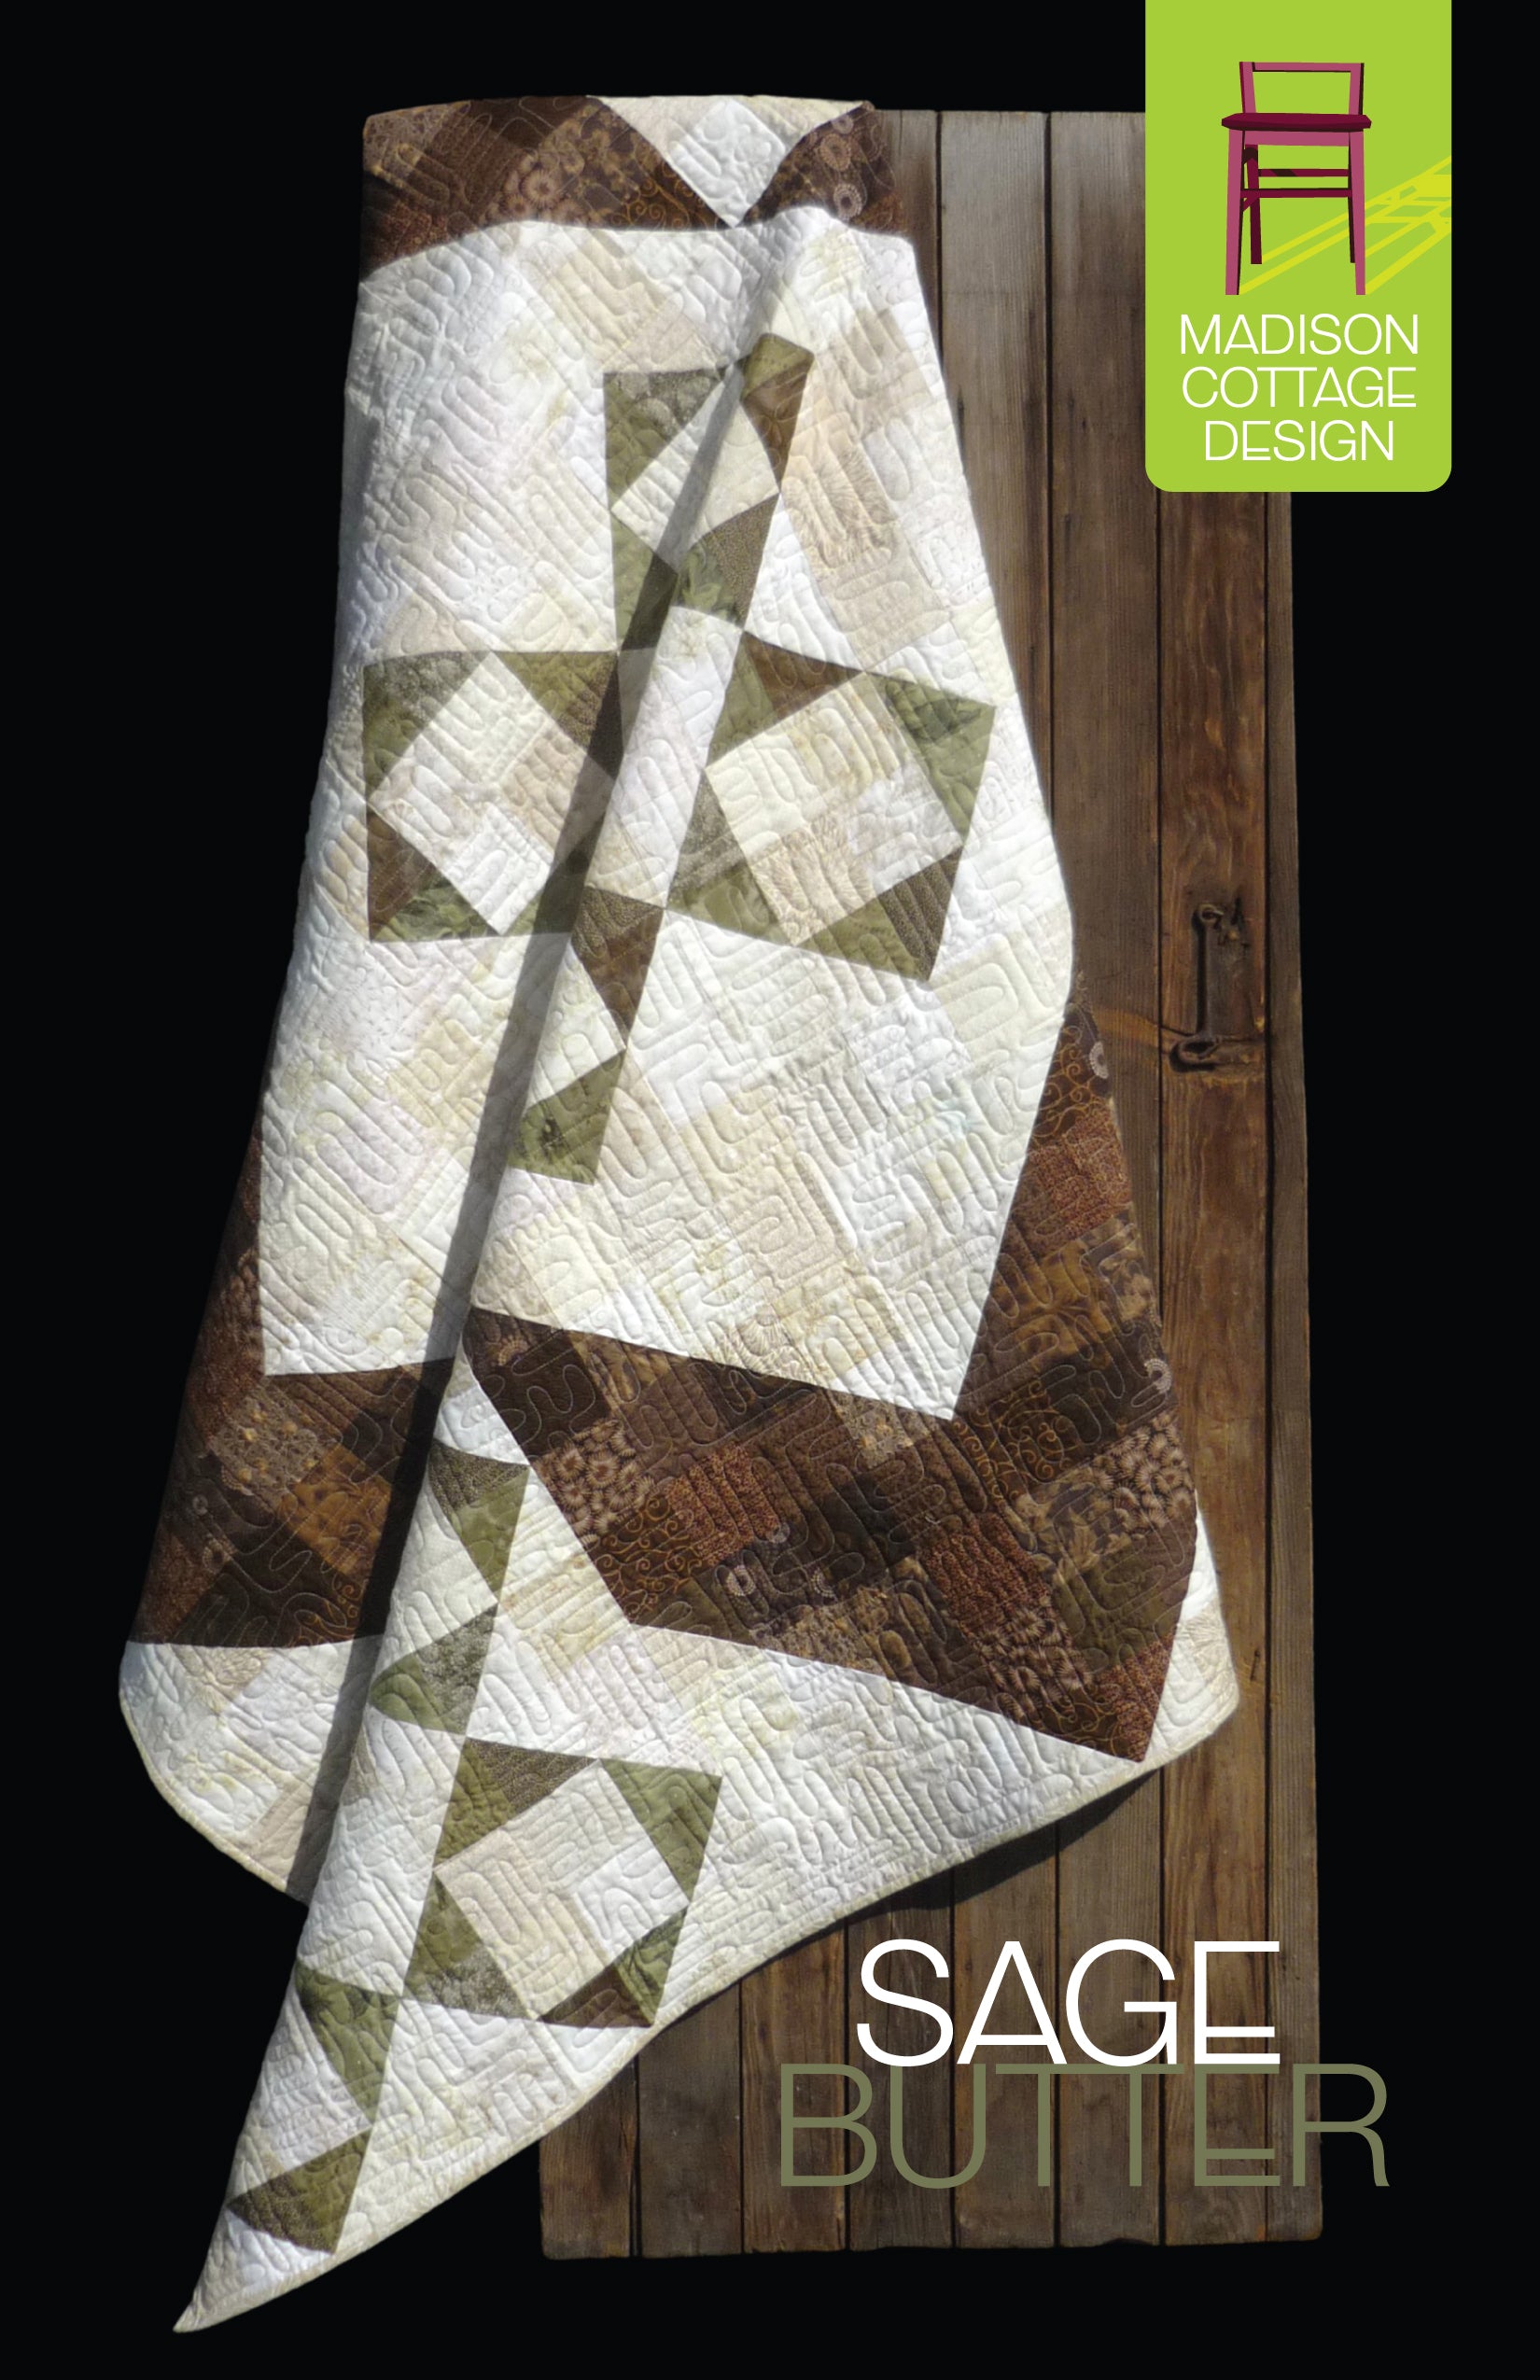 Sage Butter Quilt Pattern by Madison Cottage Design